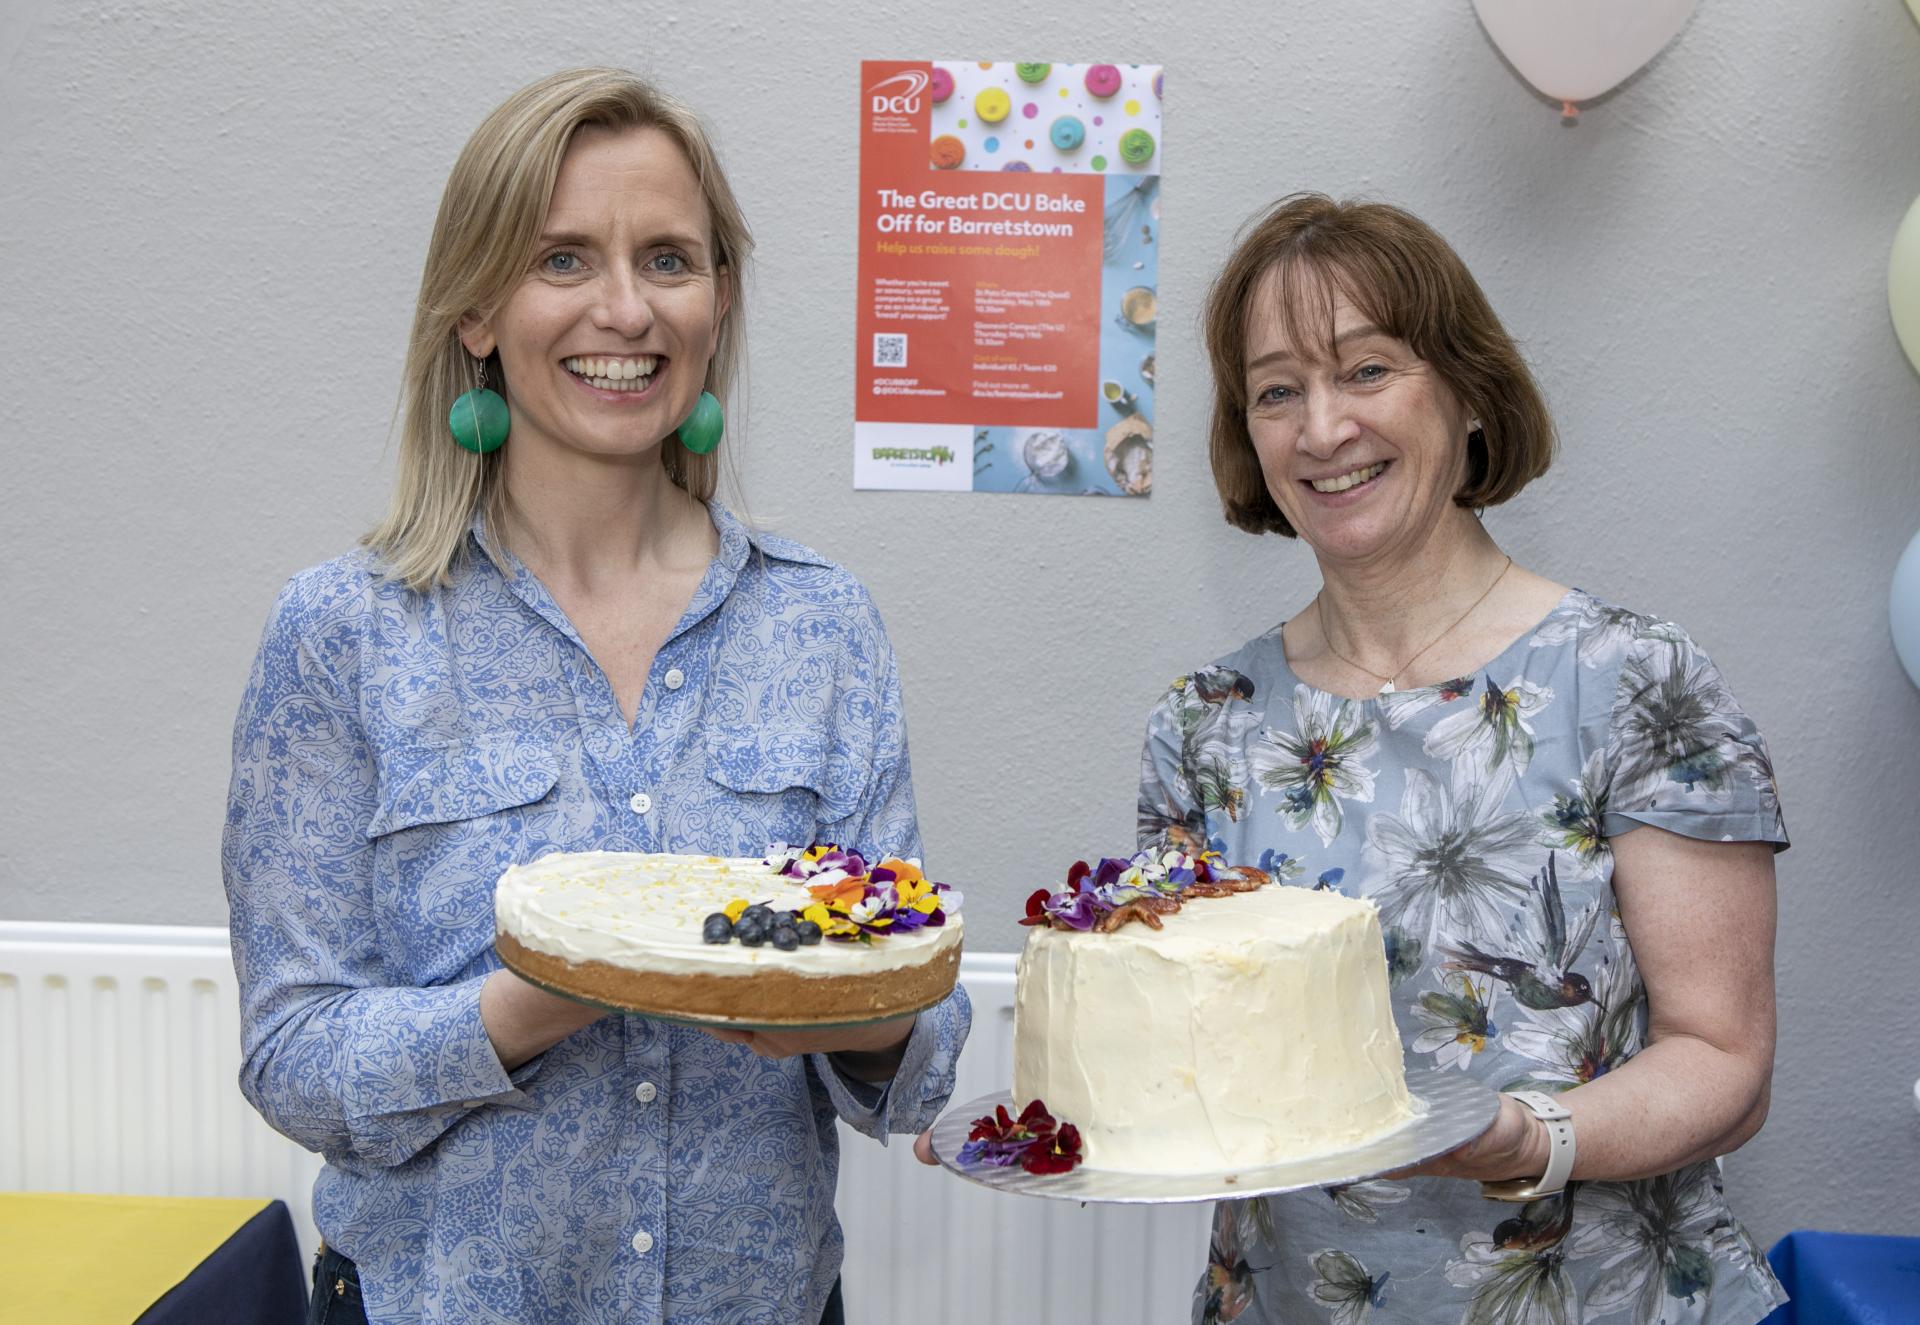 Shows Susan Marron with her Hummingbird cake